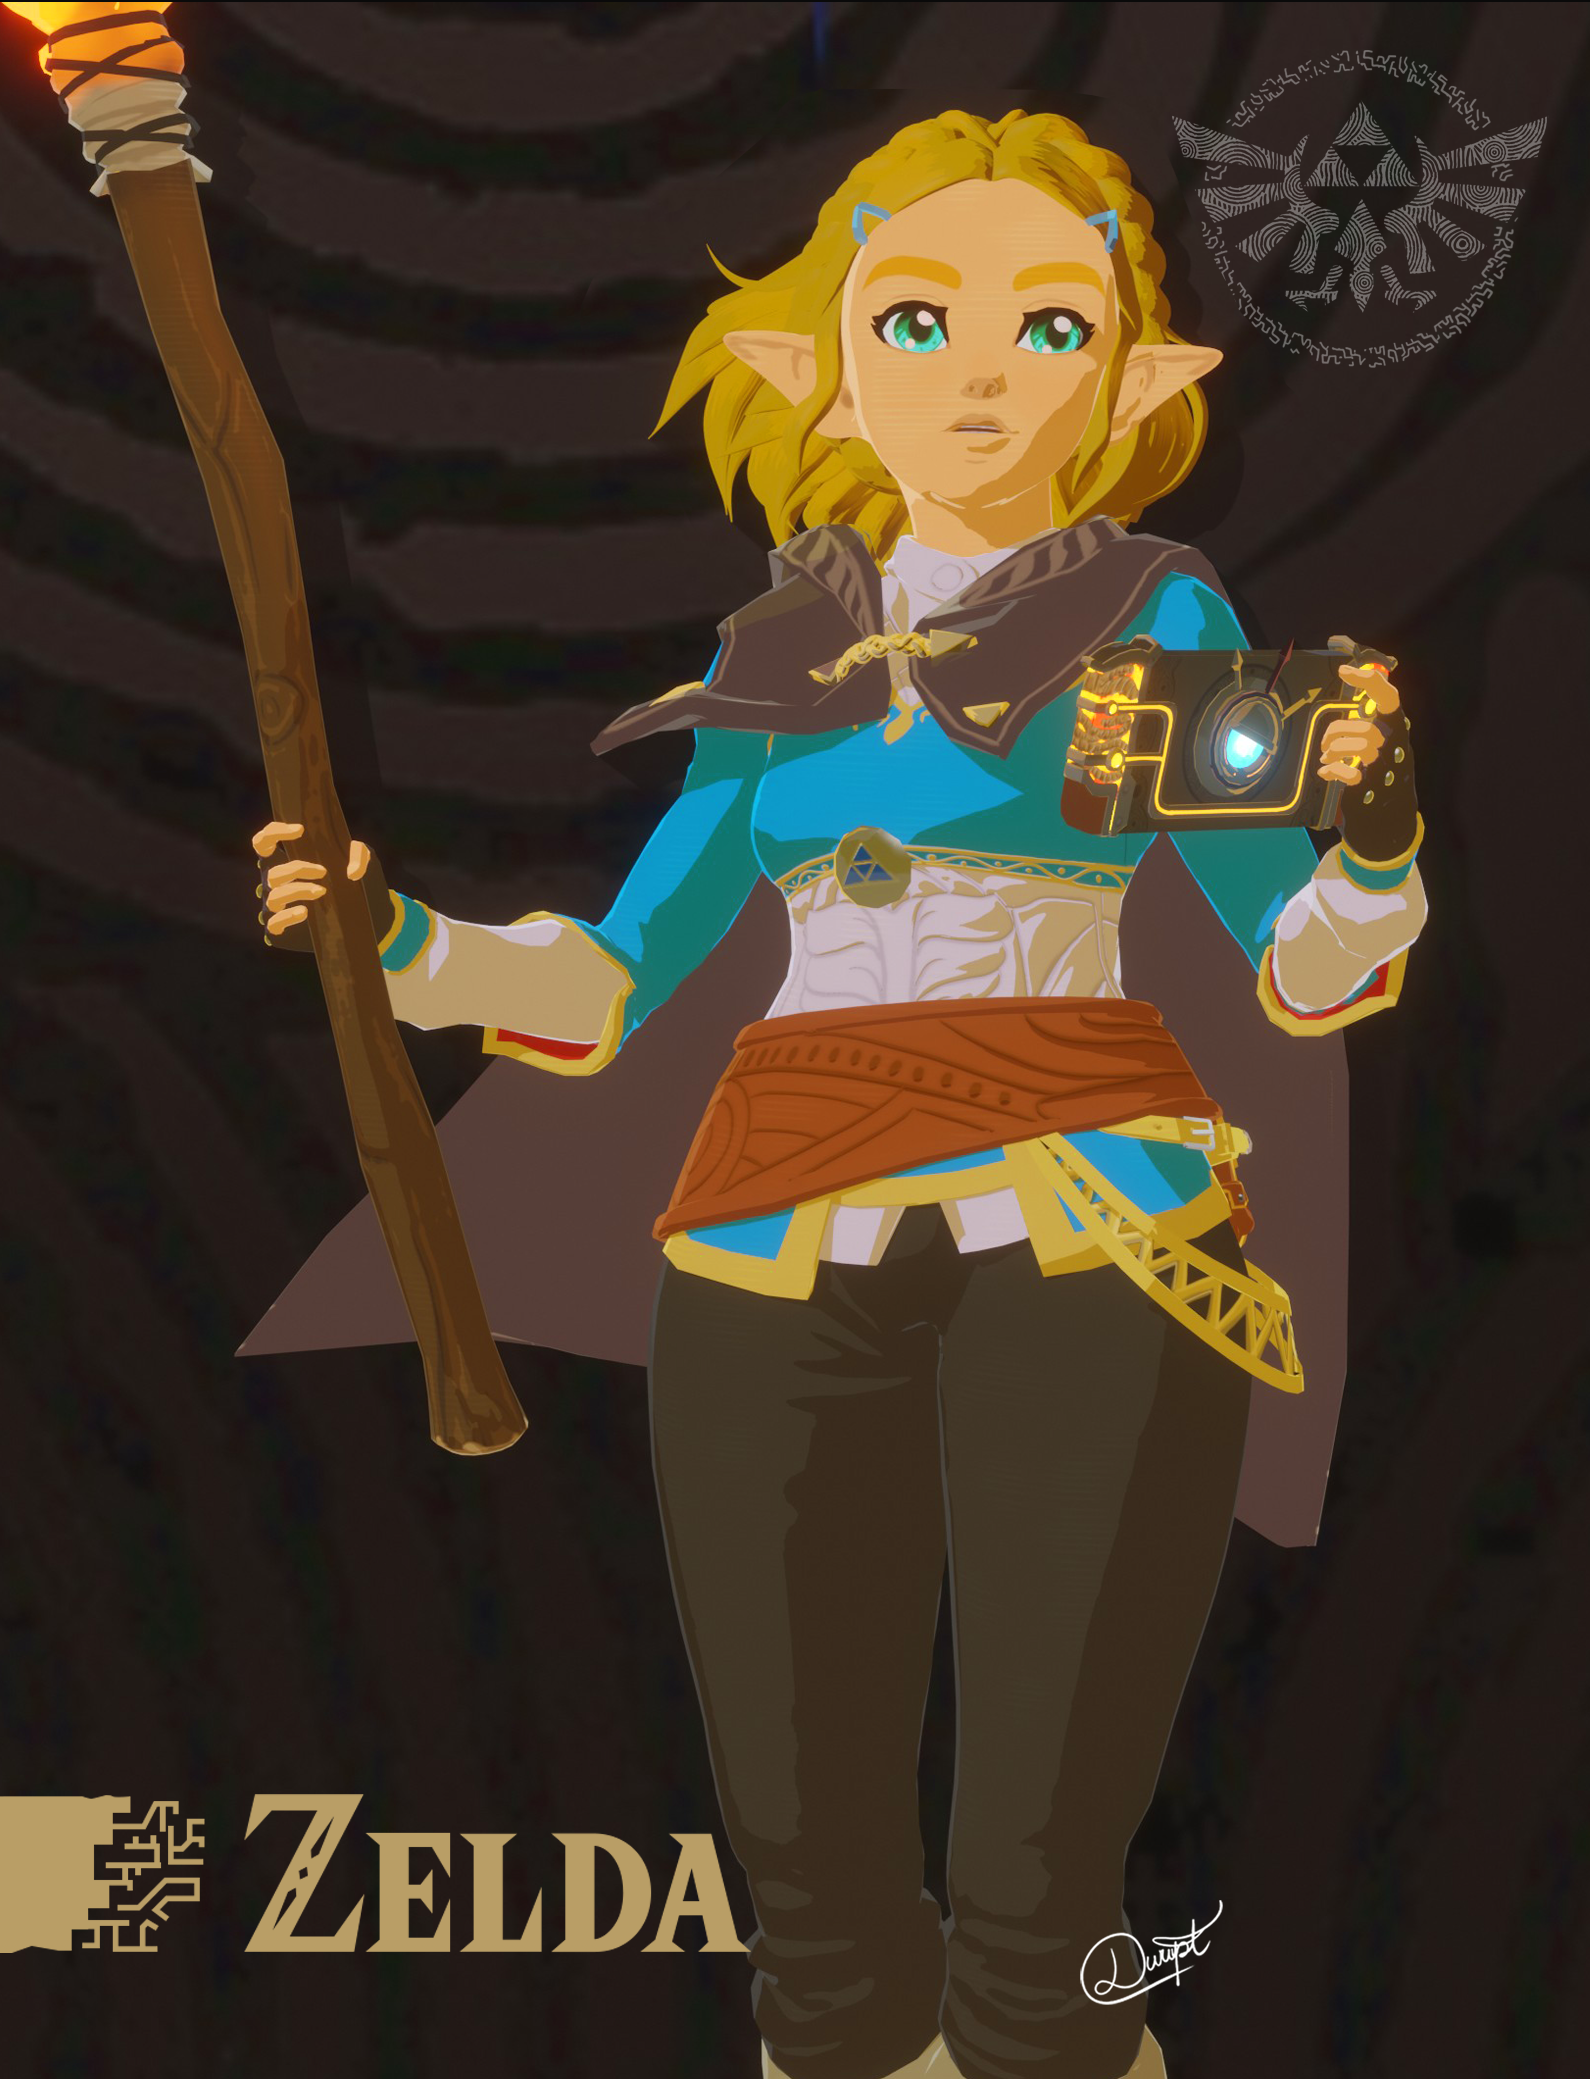 The Legend Of Zelda Tears Of The Kingdom Poster by edmaxxwtf on DeviantArt